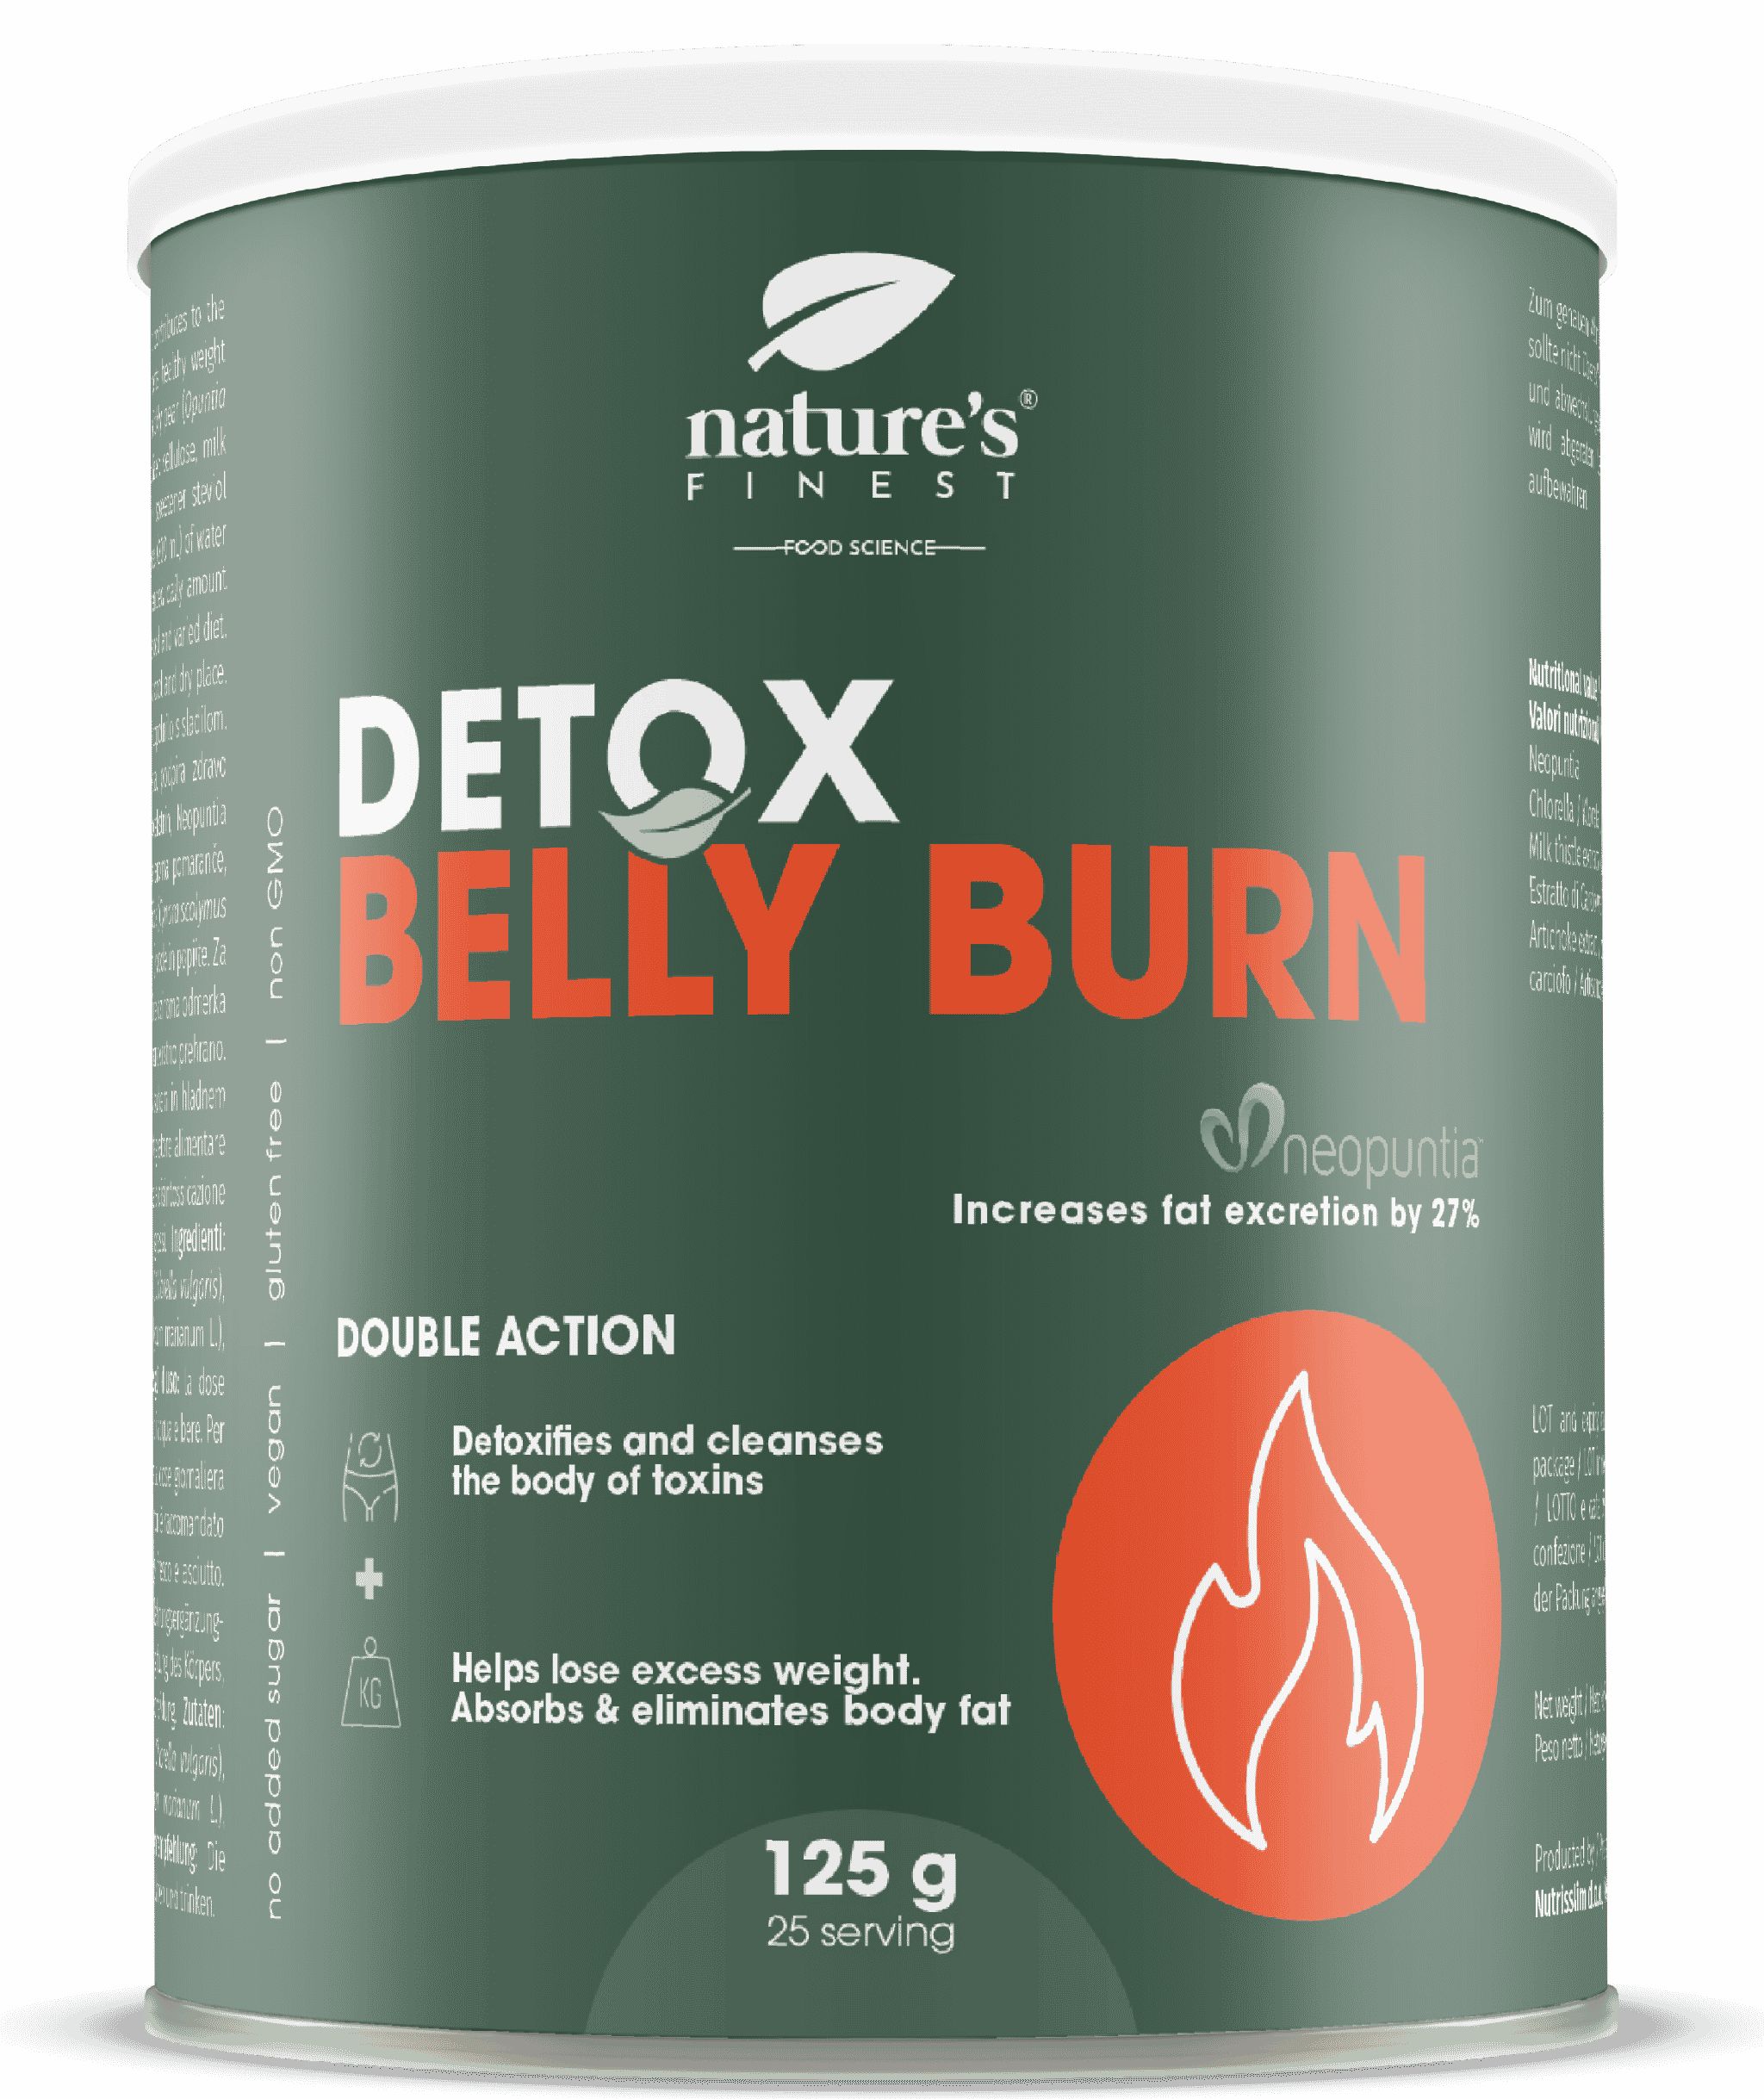 Nature's Finest Detox Belly Burn - Ergänzung zum Entgiftung, Abnehmen und Fettverbrenner